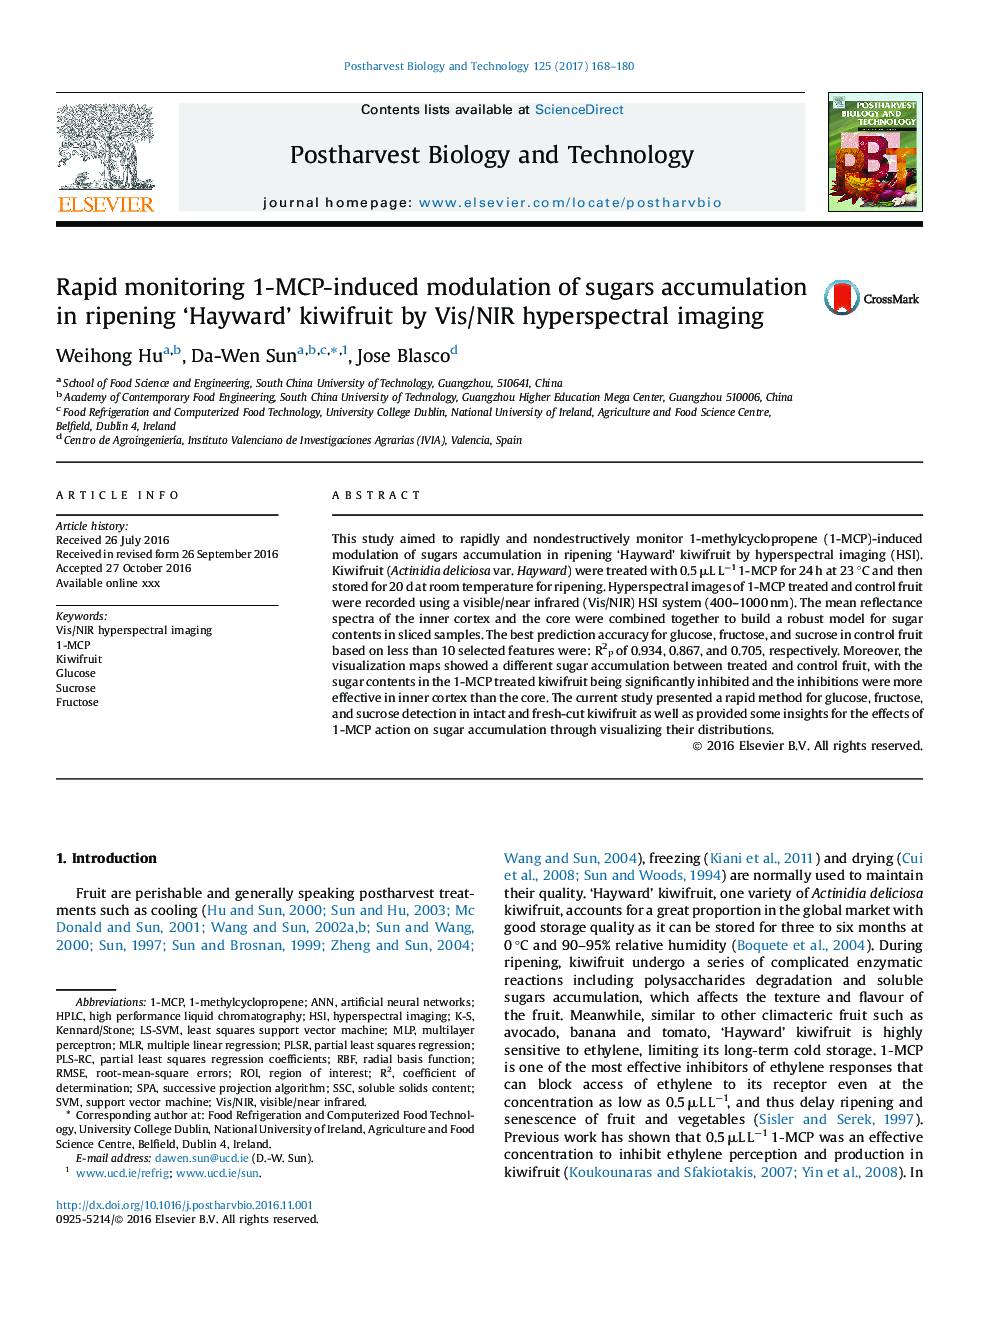 Rapid monitoring 1-MCP-induced modulation of sugars accumulation in ripening 'Hayward' kiwifruit by Vis/NIR hyperspectral imaging